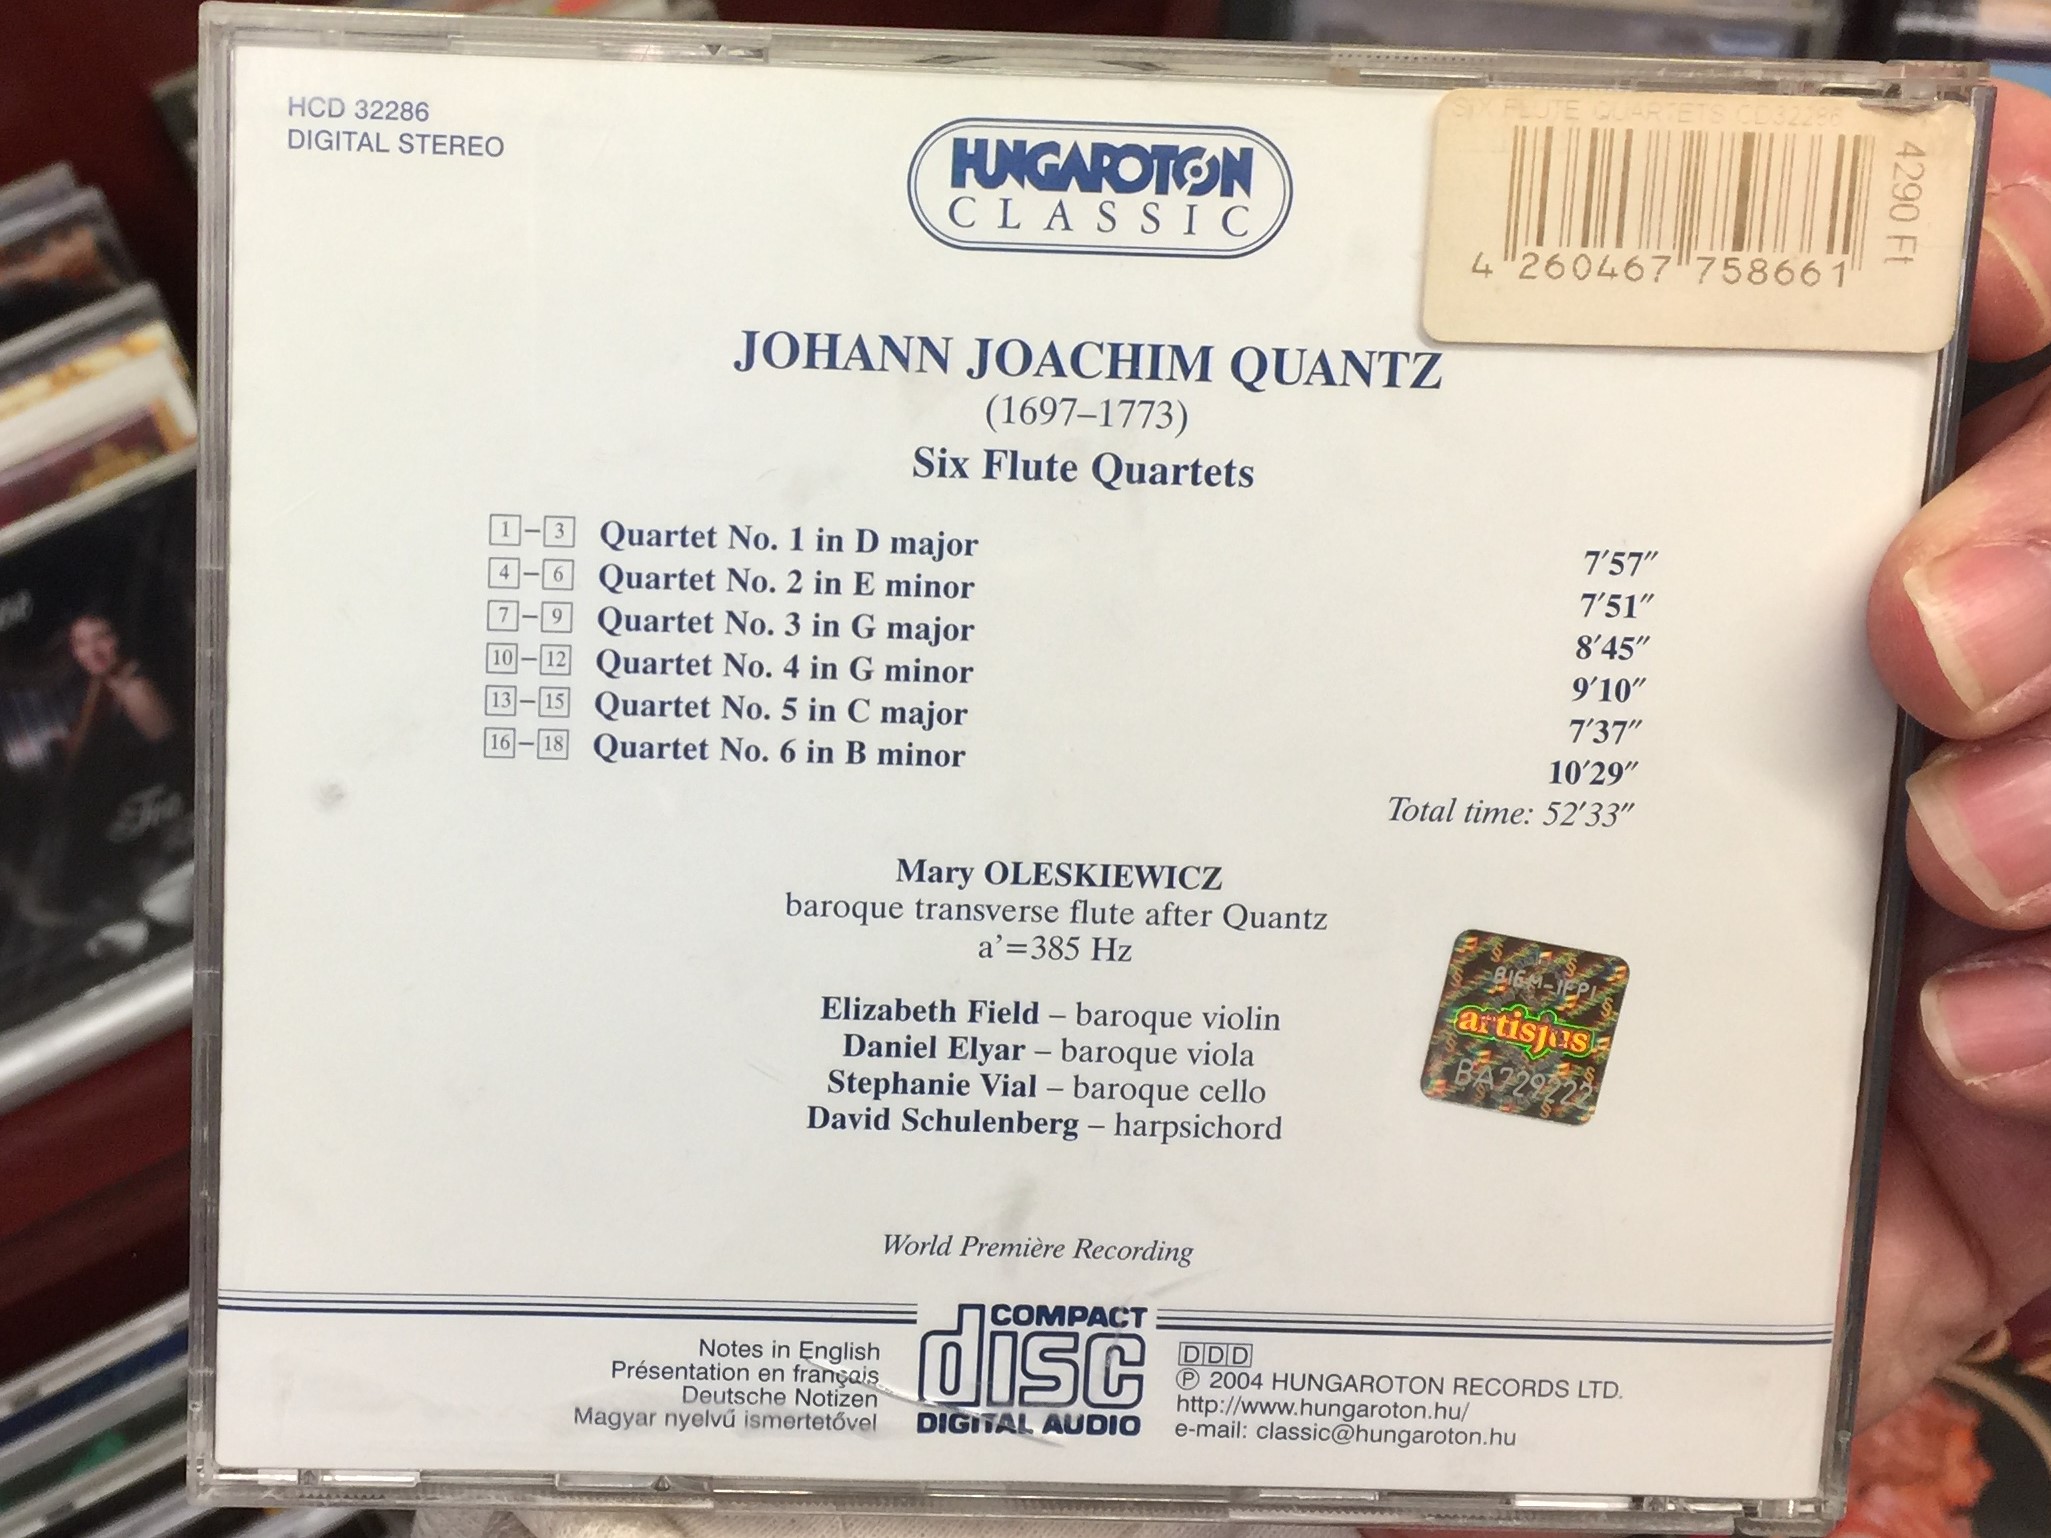 johann-joachim-quantz-six-flute-quartets-mary-oleskiewicz.-elizabeth-field-daniel-elyar-stephanie-vial-david-schulenberg-hungaroton-classic-audio-cd-2004-stereo-hcd-32286-2-.jpg